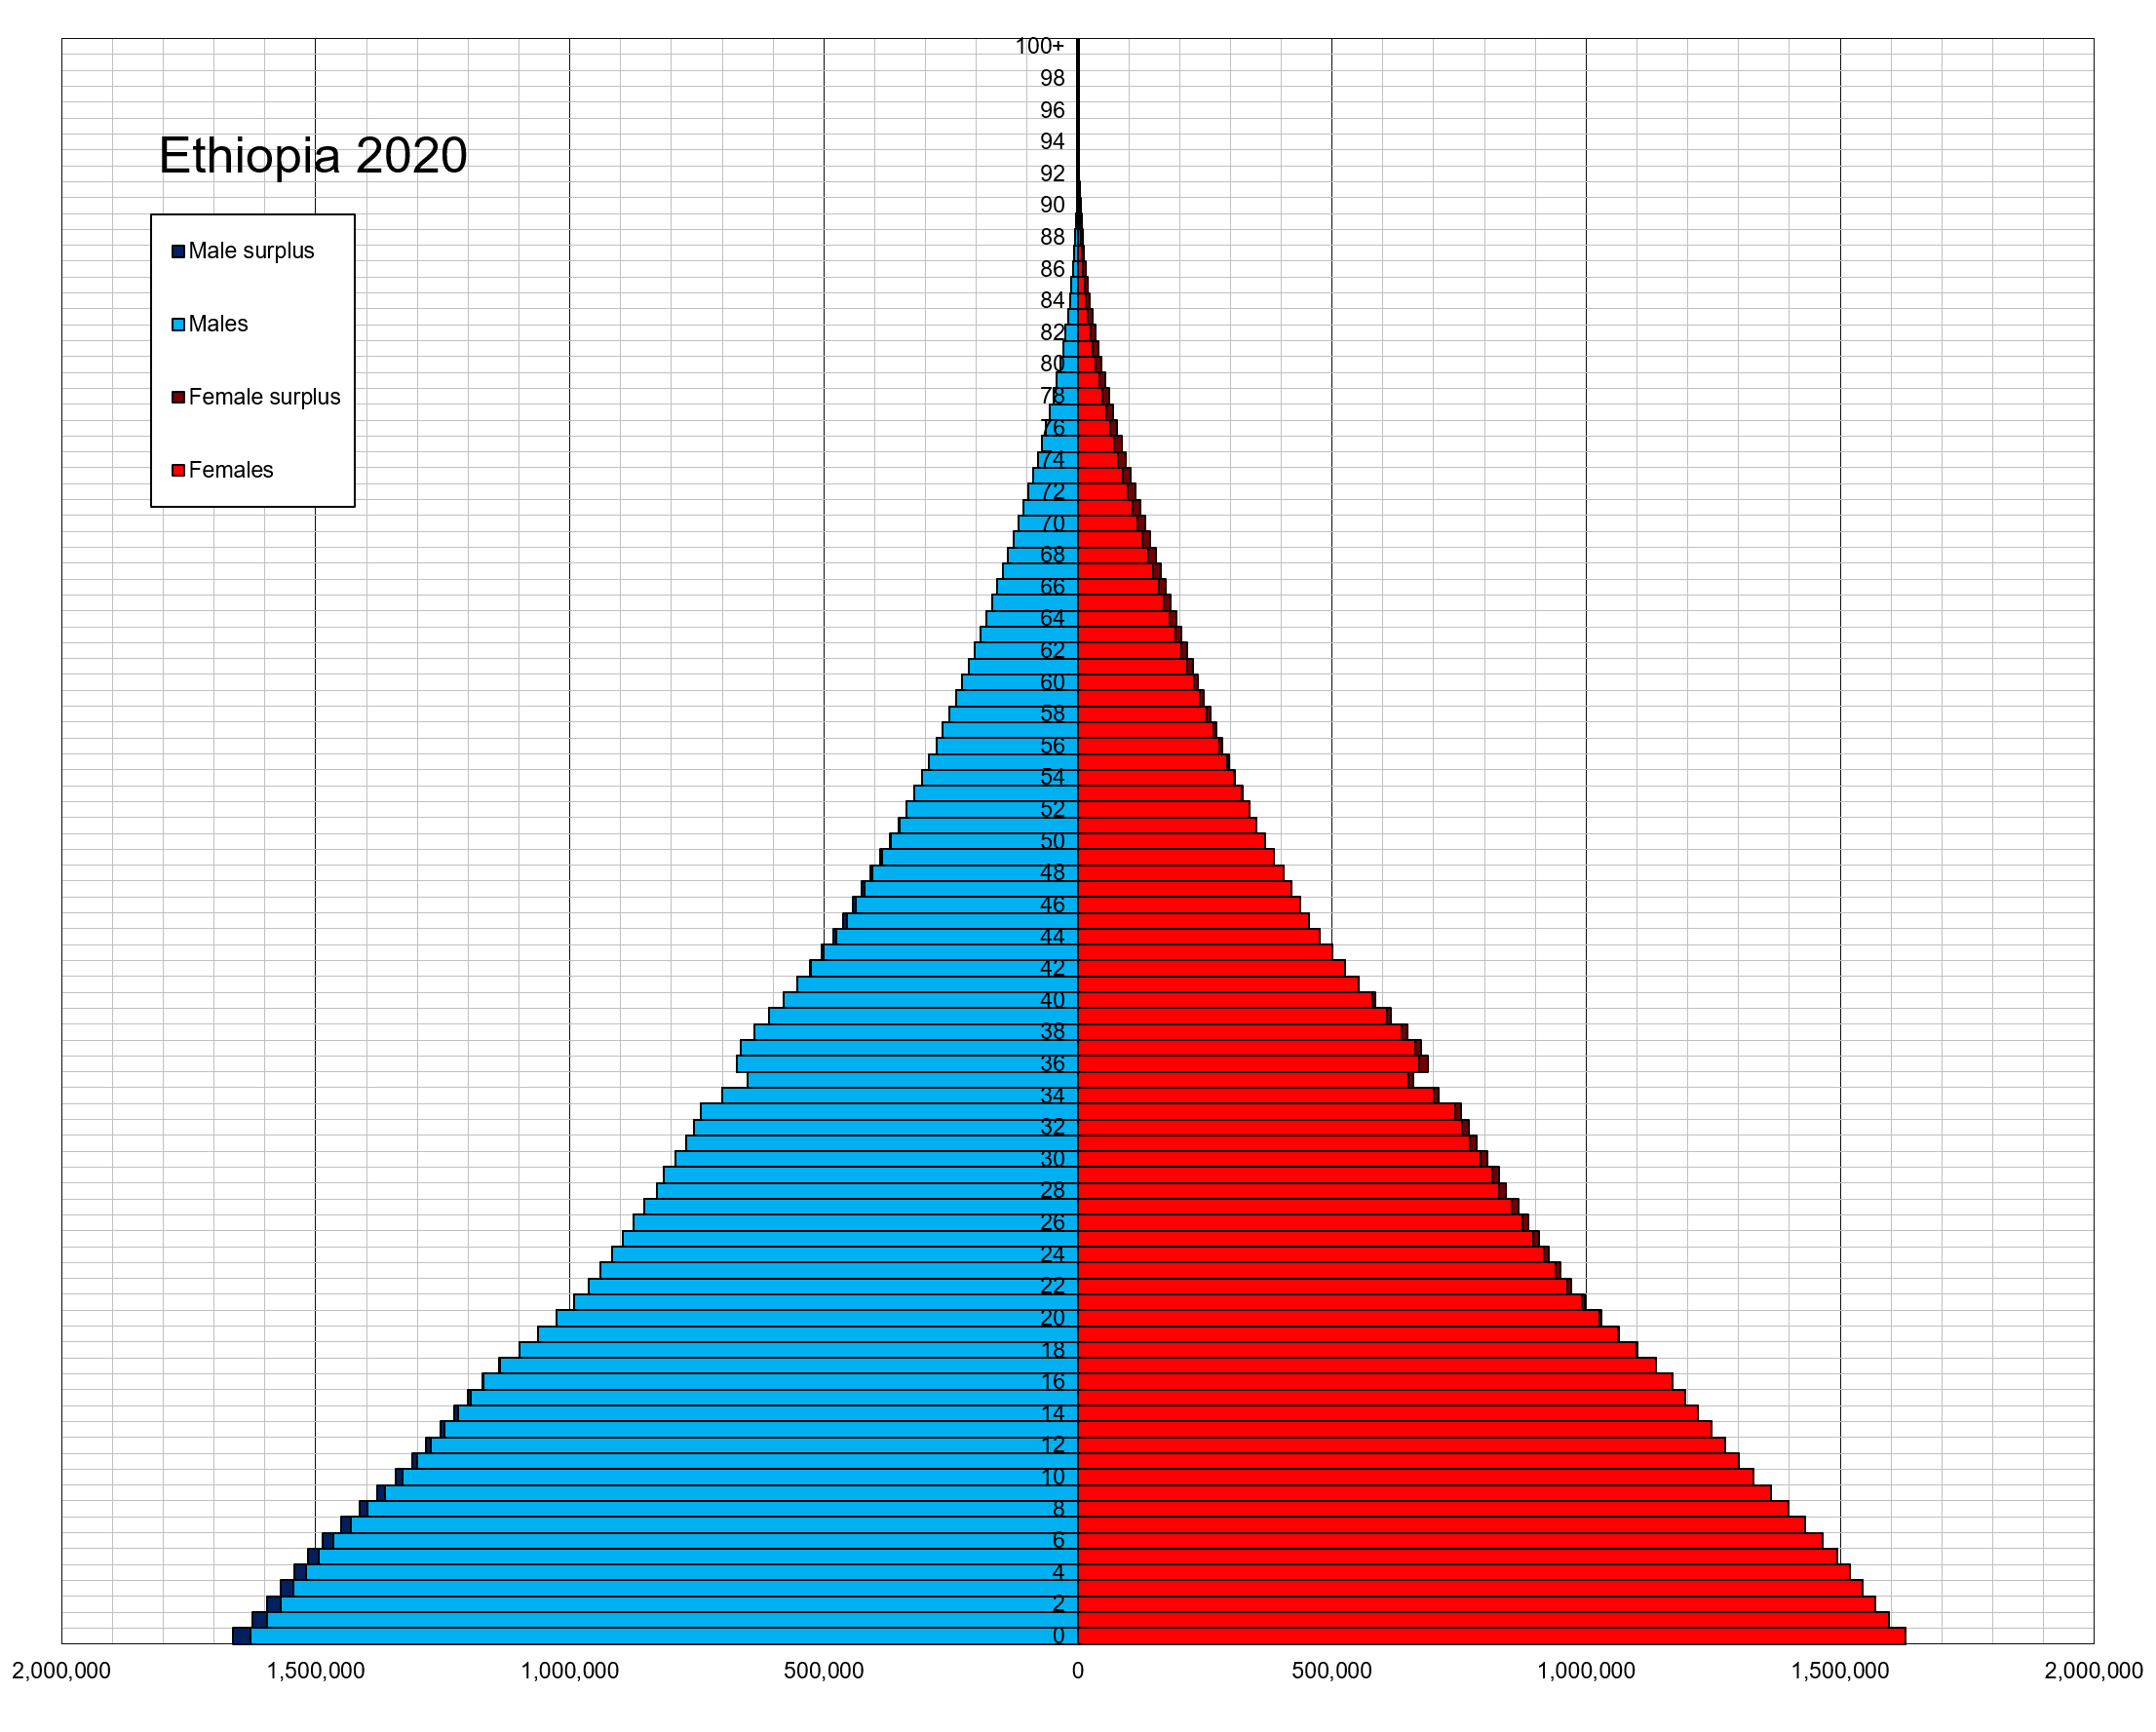 Ethiopia single age population pyramid 2020.png